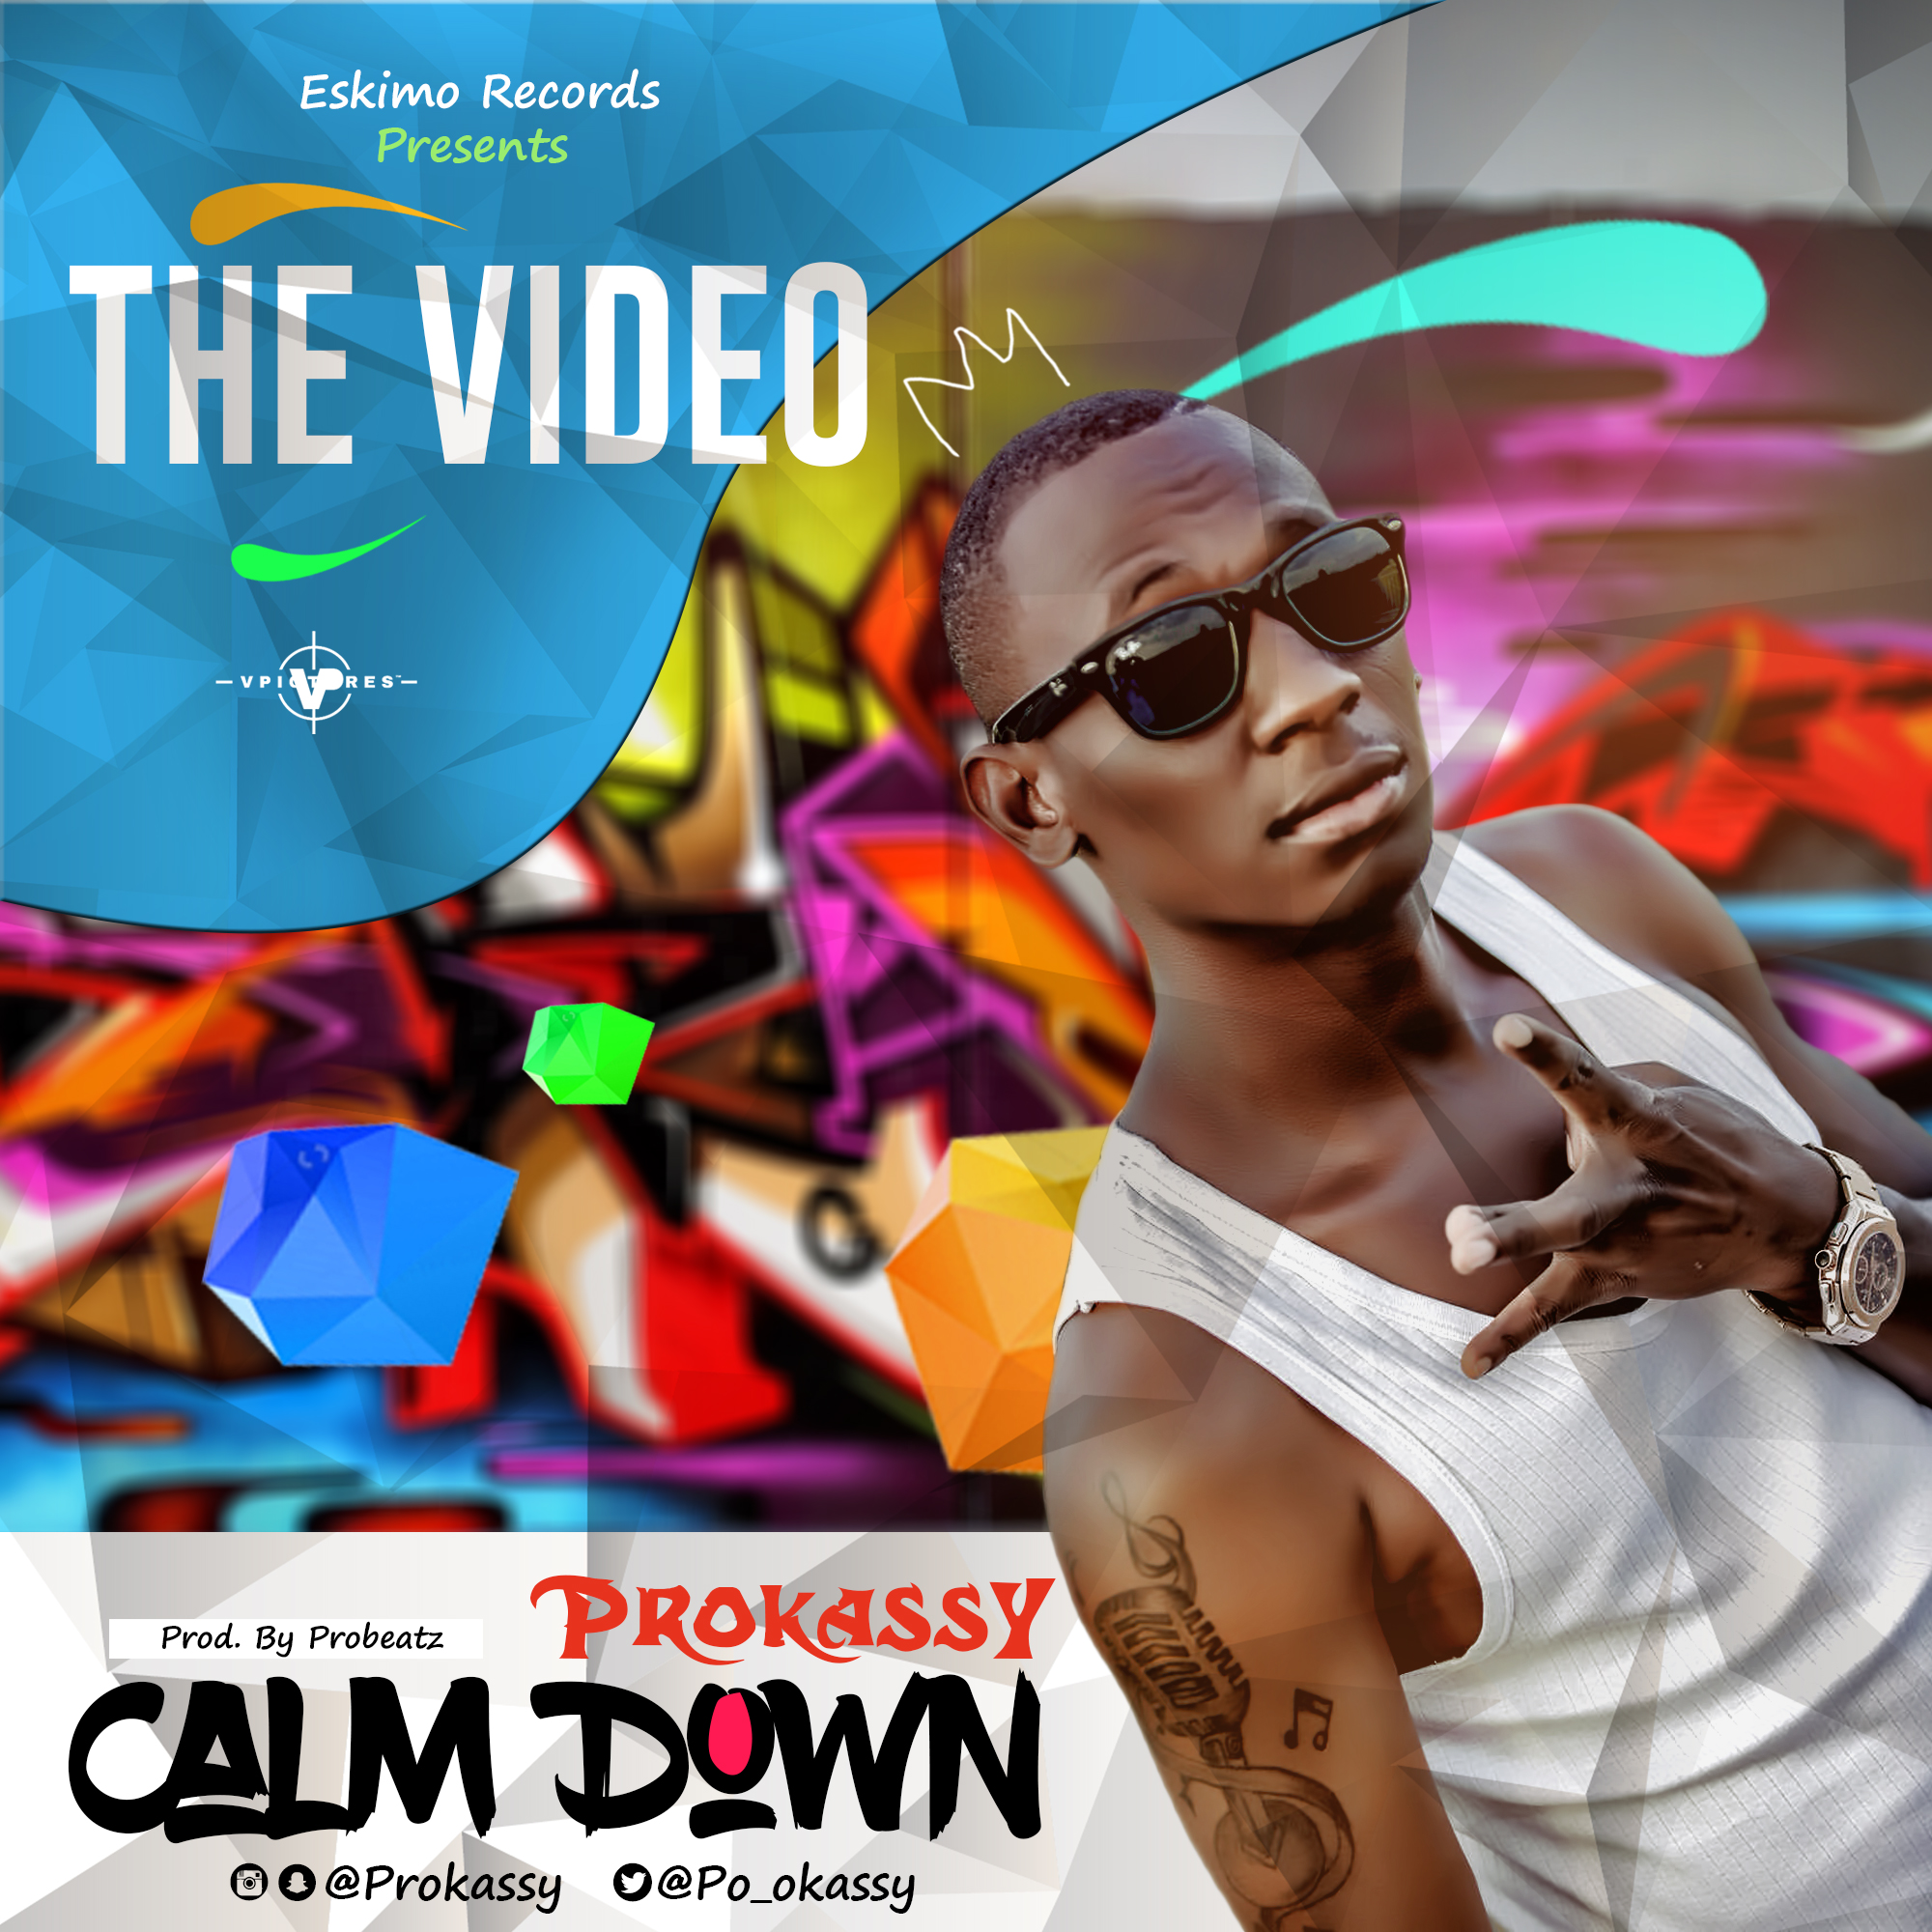 VIDEO: Prokassy - Calm Down 